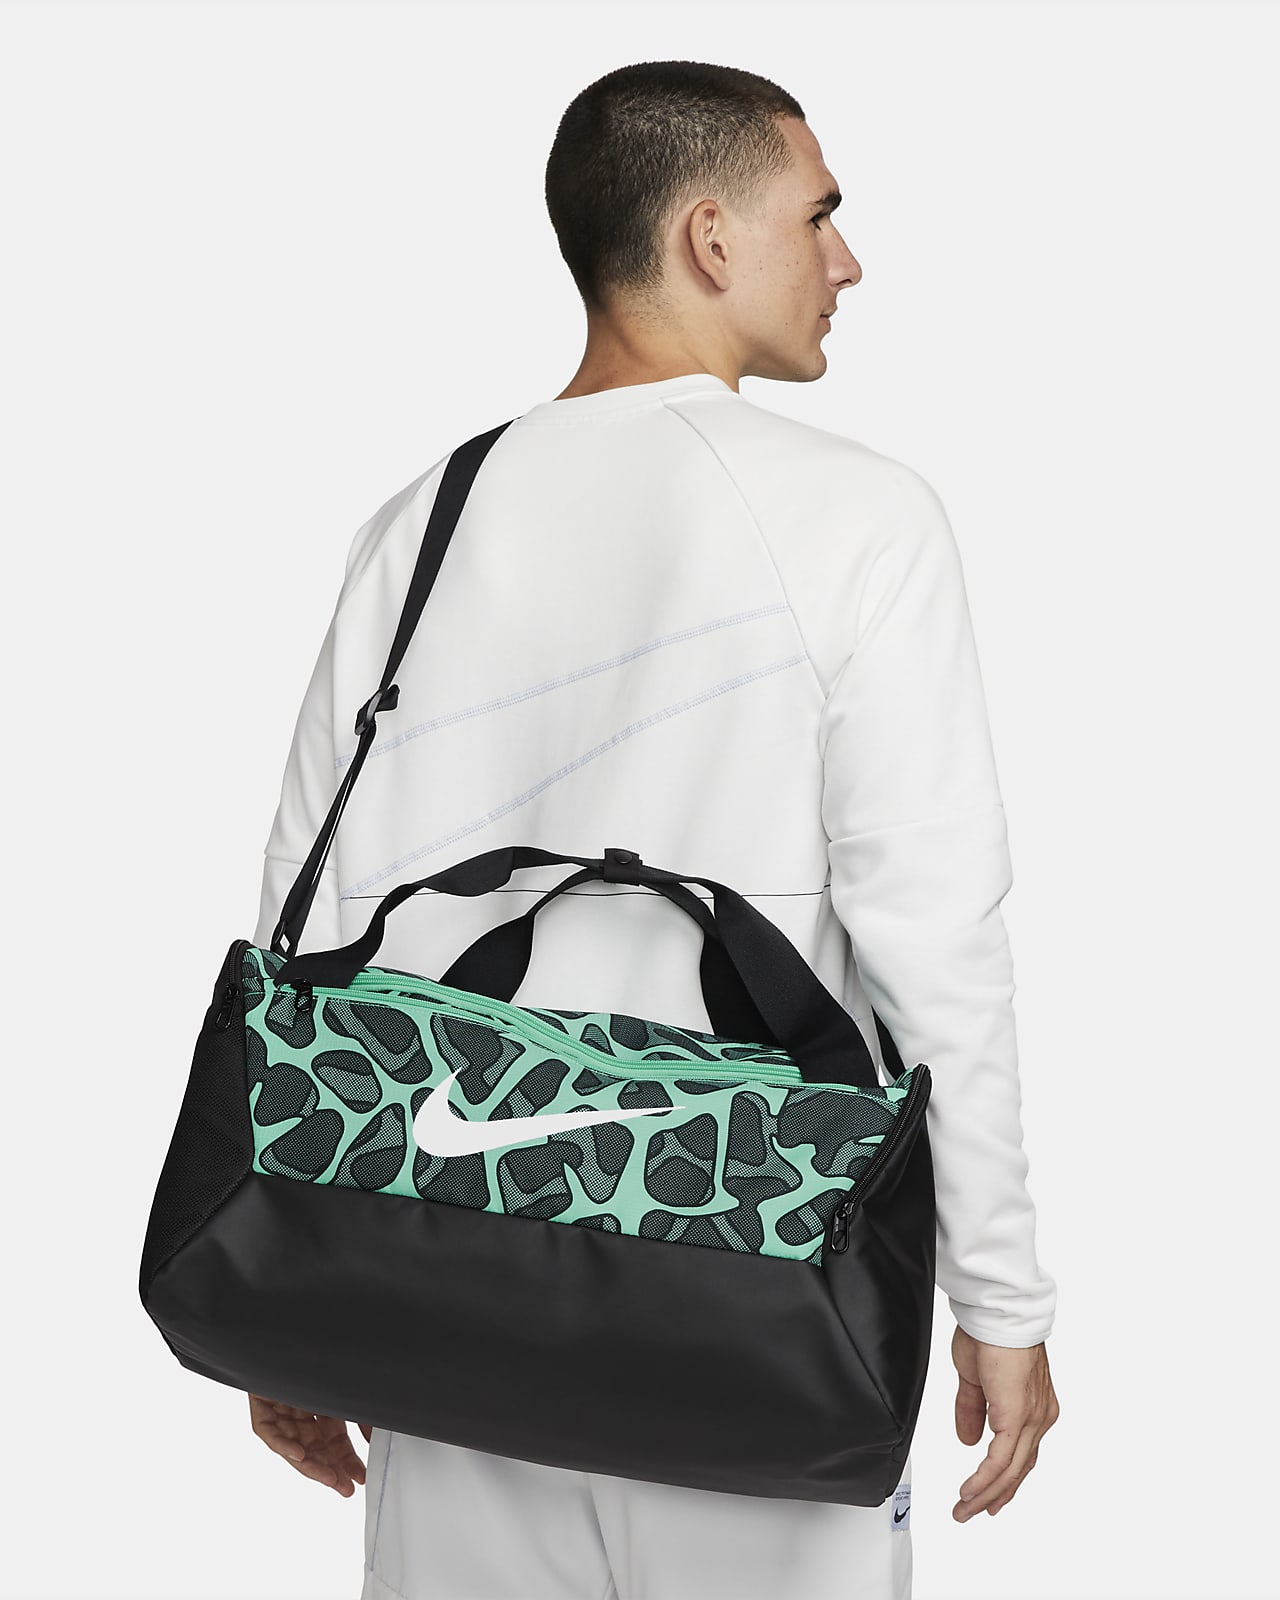 Nike Brasilia Small Duffel Bag, Men's Fashion, Bags, Backpacks on Carousell